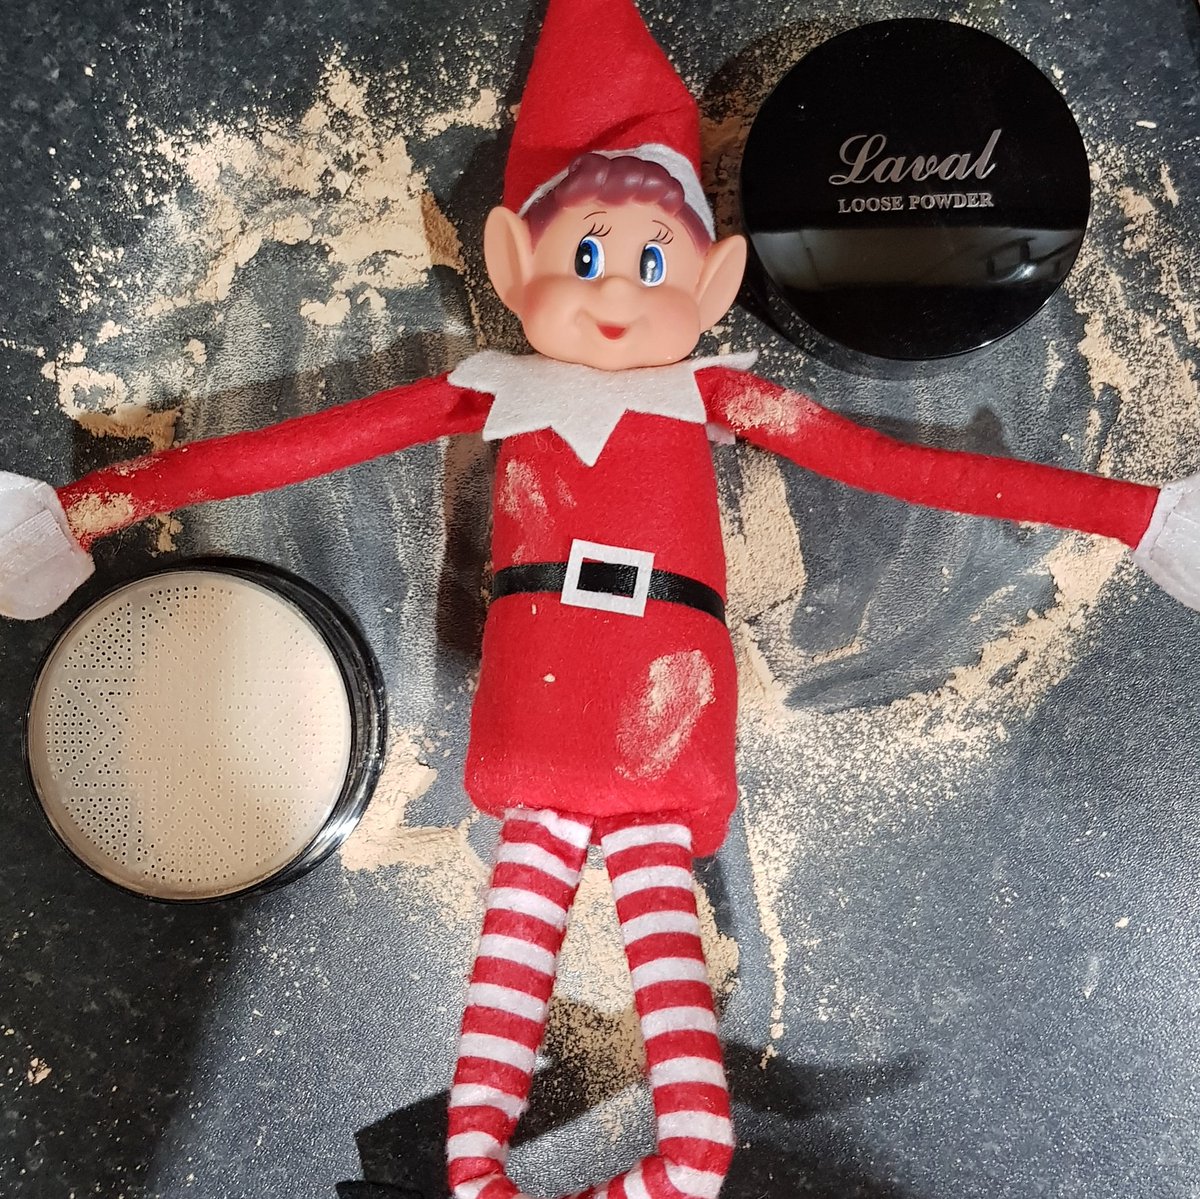 Elfis looks a bit cagey this morning! Caught in the act.

#elfispresley #Elf #ElfonTheShelf  #elvesbehavinbadly #elvesbehavingbadly #laval #lavalcosmetics #lavalloosepowder #loosepowder #lavaltranslucentloosepowder #translucent #snowangel #bloggerstribe #Christmas